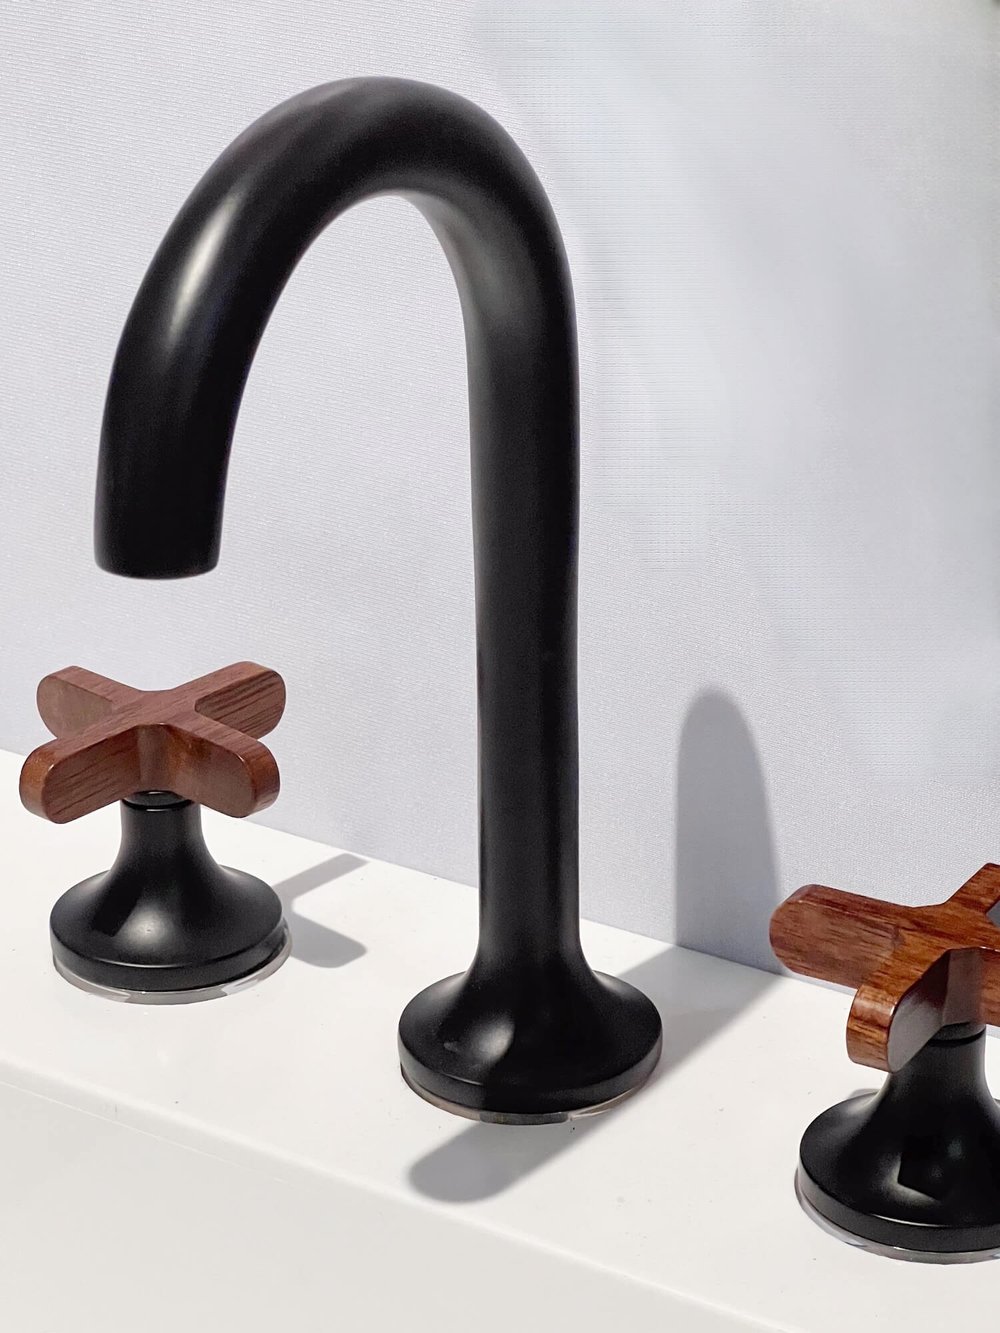 wooden faucet handles.JPG